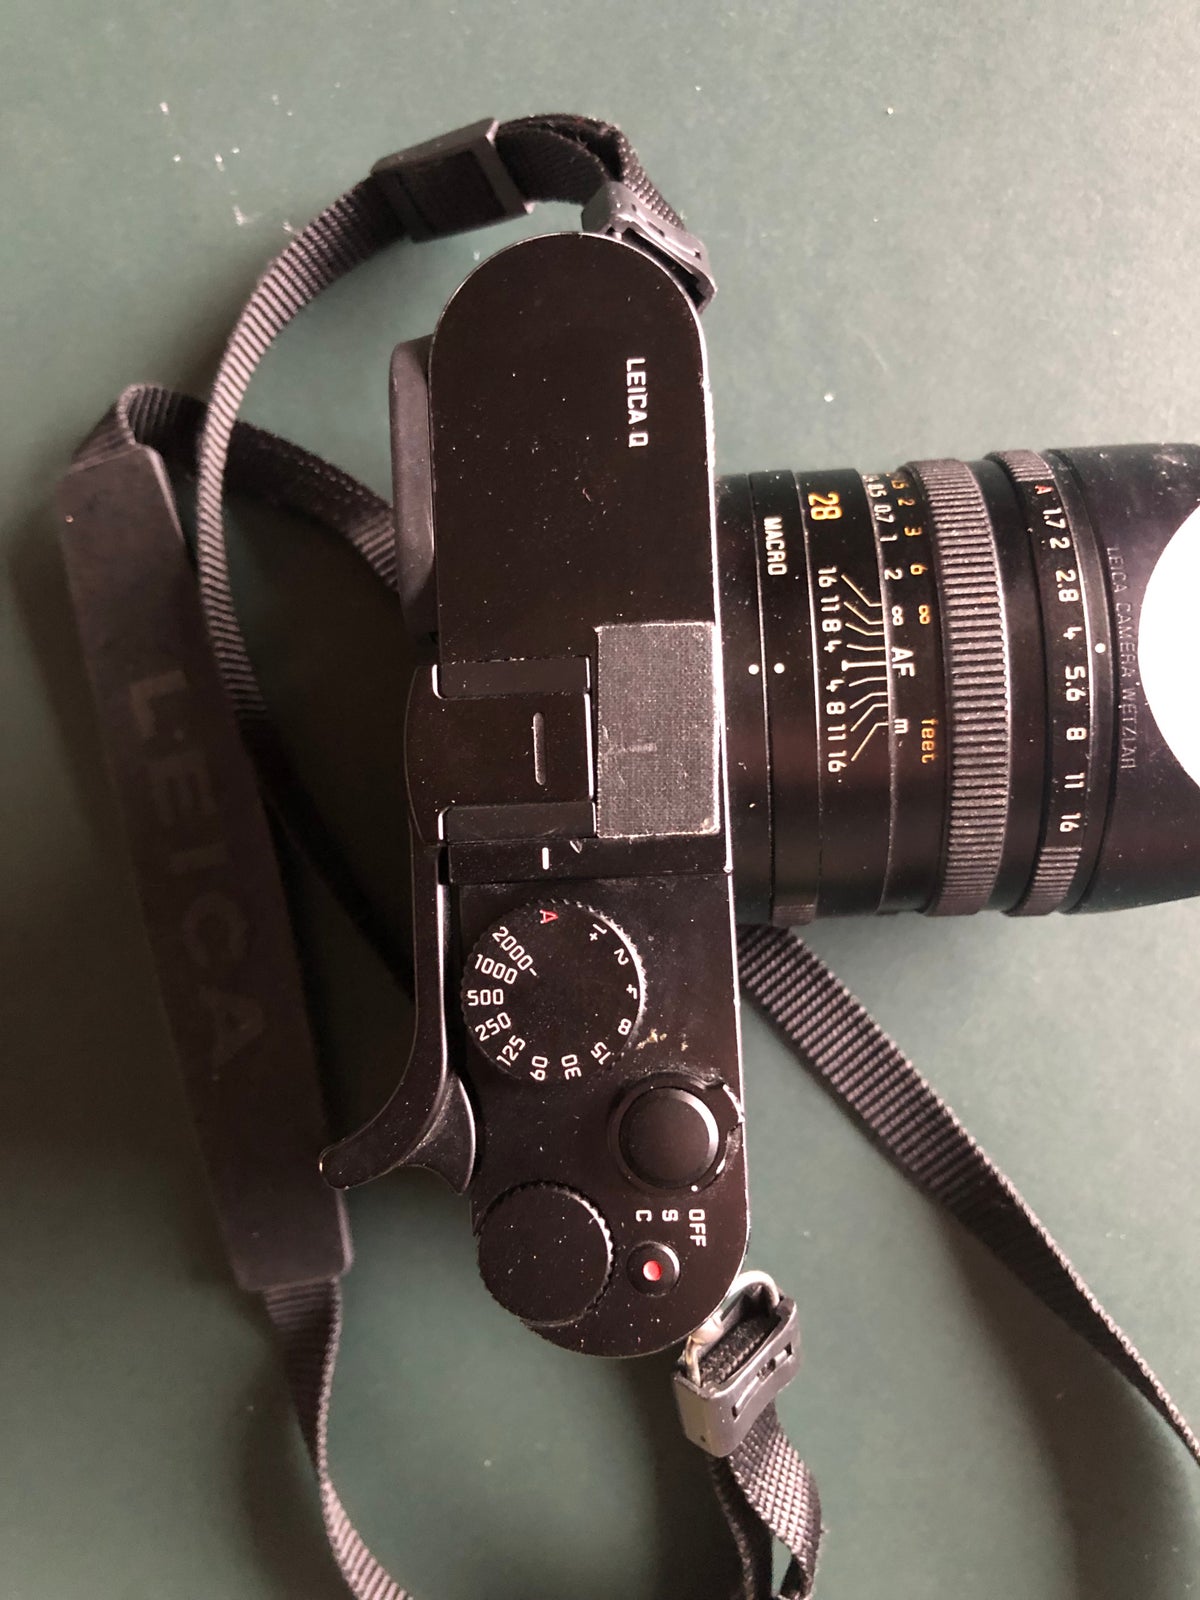 Leica, Q typ116, 24.6 mp megapixels